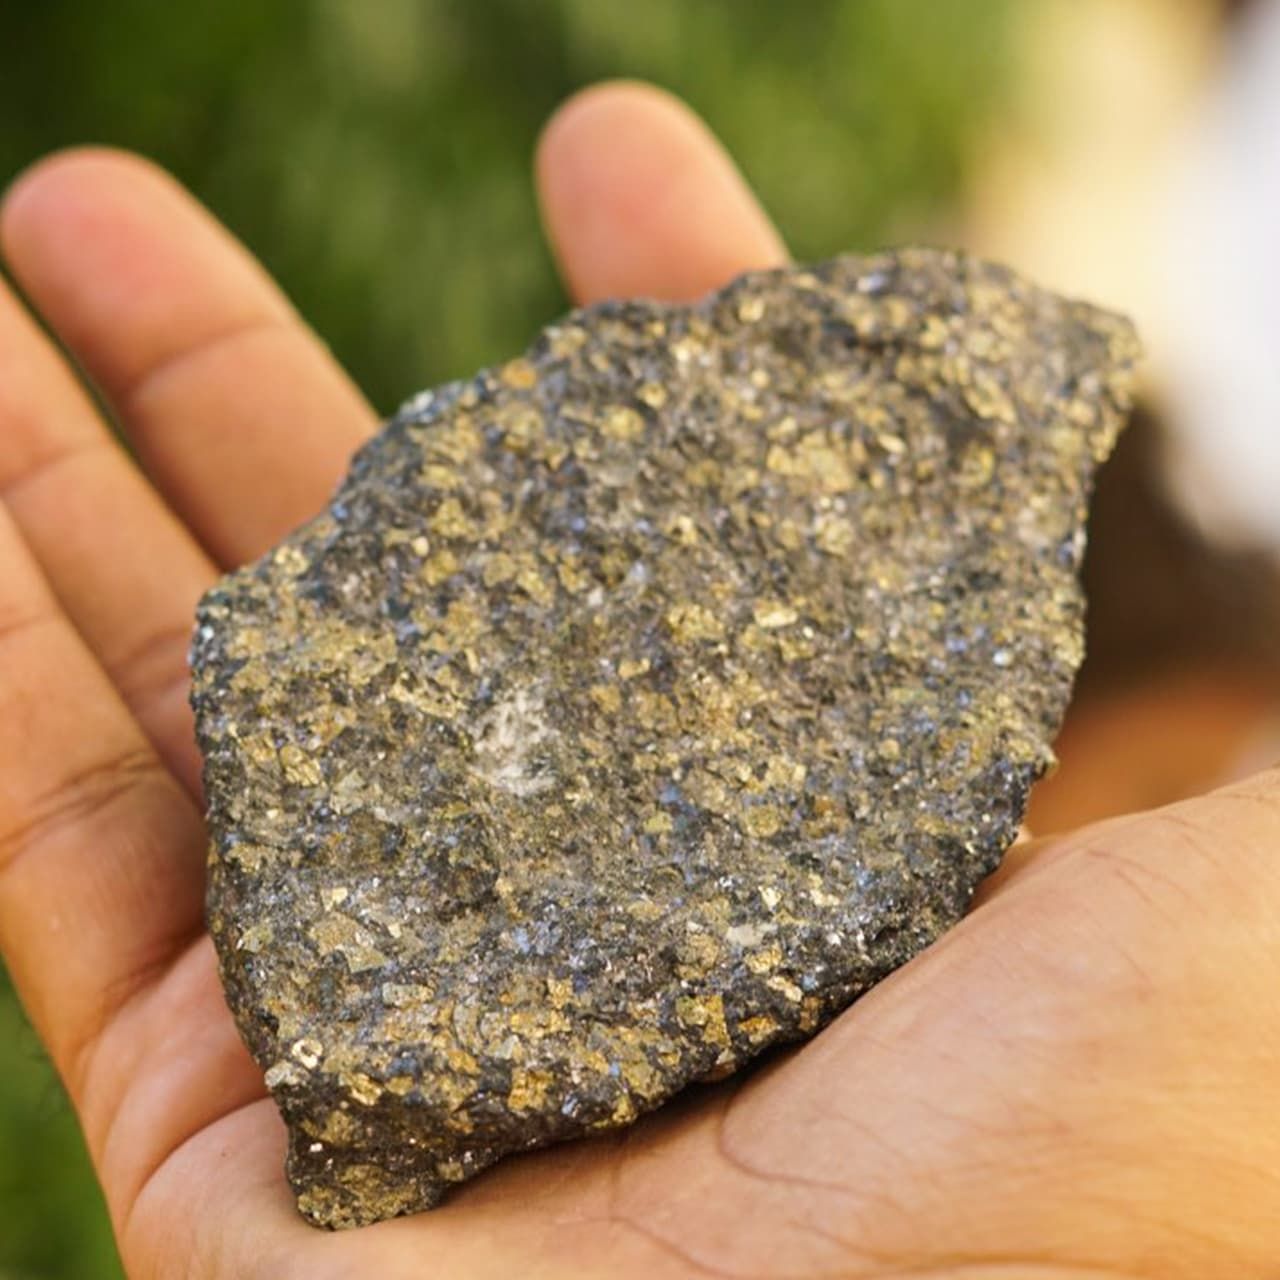 Como identificar rochas?